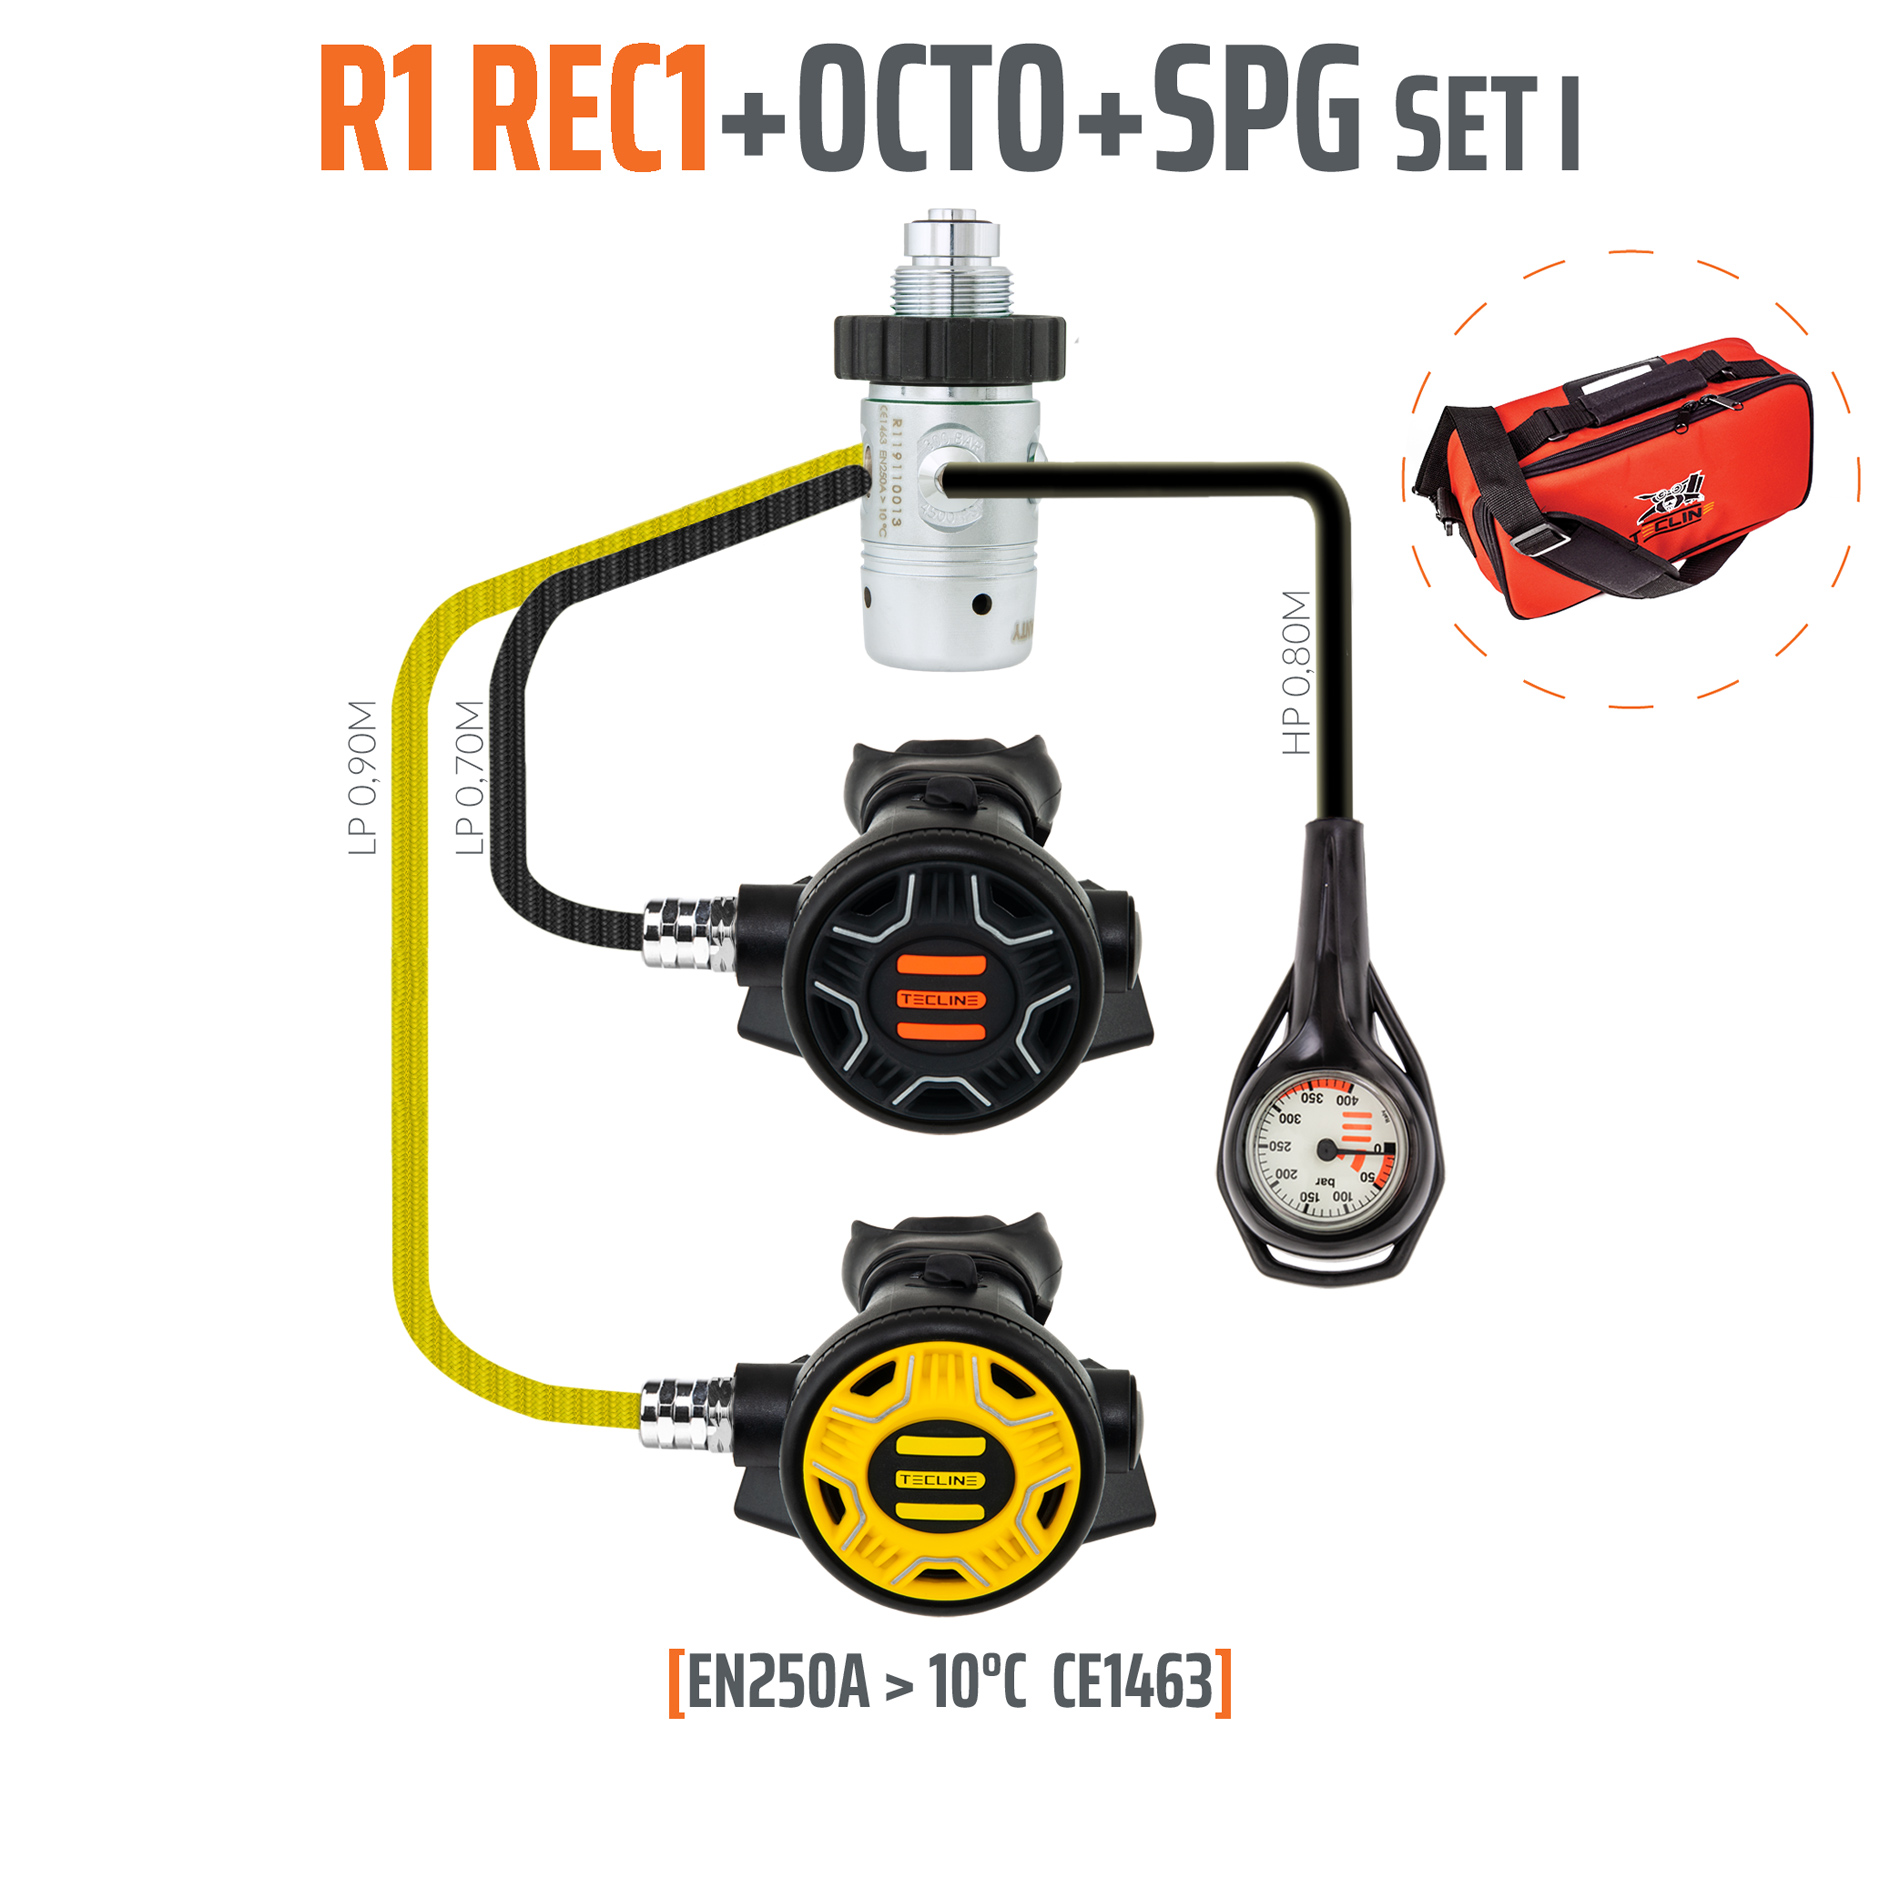 Tecline Regulator R1 REC1 set I with octo and SPG - EN250A > 10°C